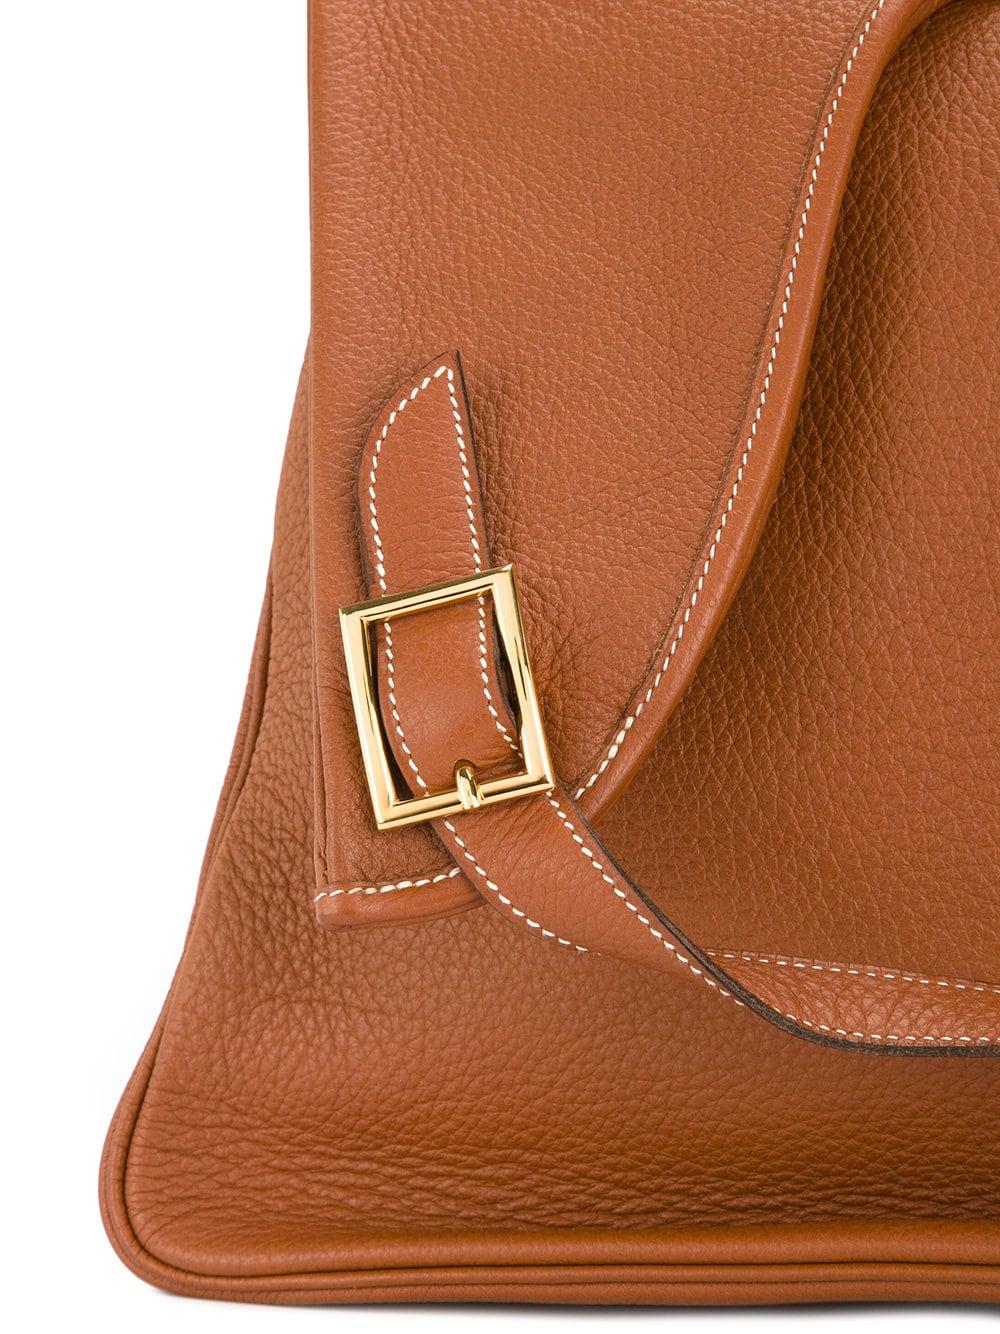 Hermes Cognac Leather Large Hobo Style Carryall Shoulder Bag

Leather
Gold tone hardware
Woven lining
Made in France
Date code present
Shoulder strap drop 11.5